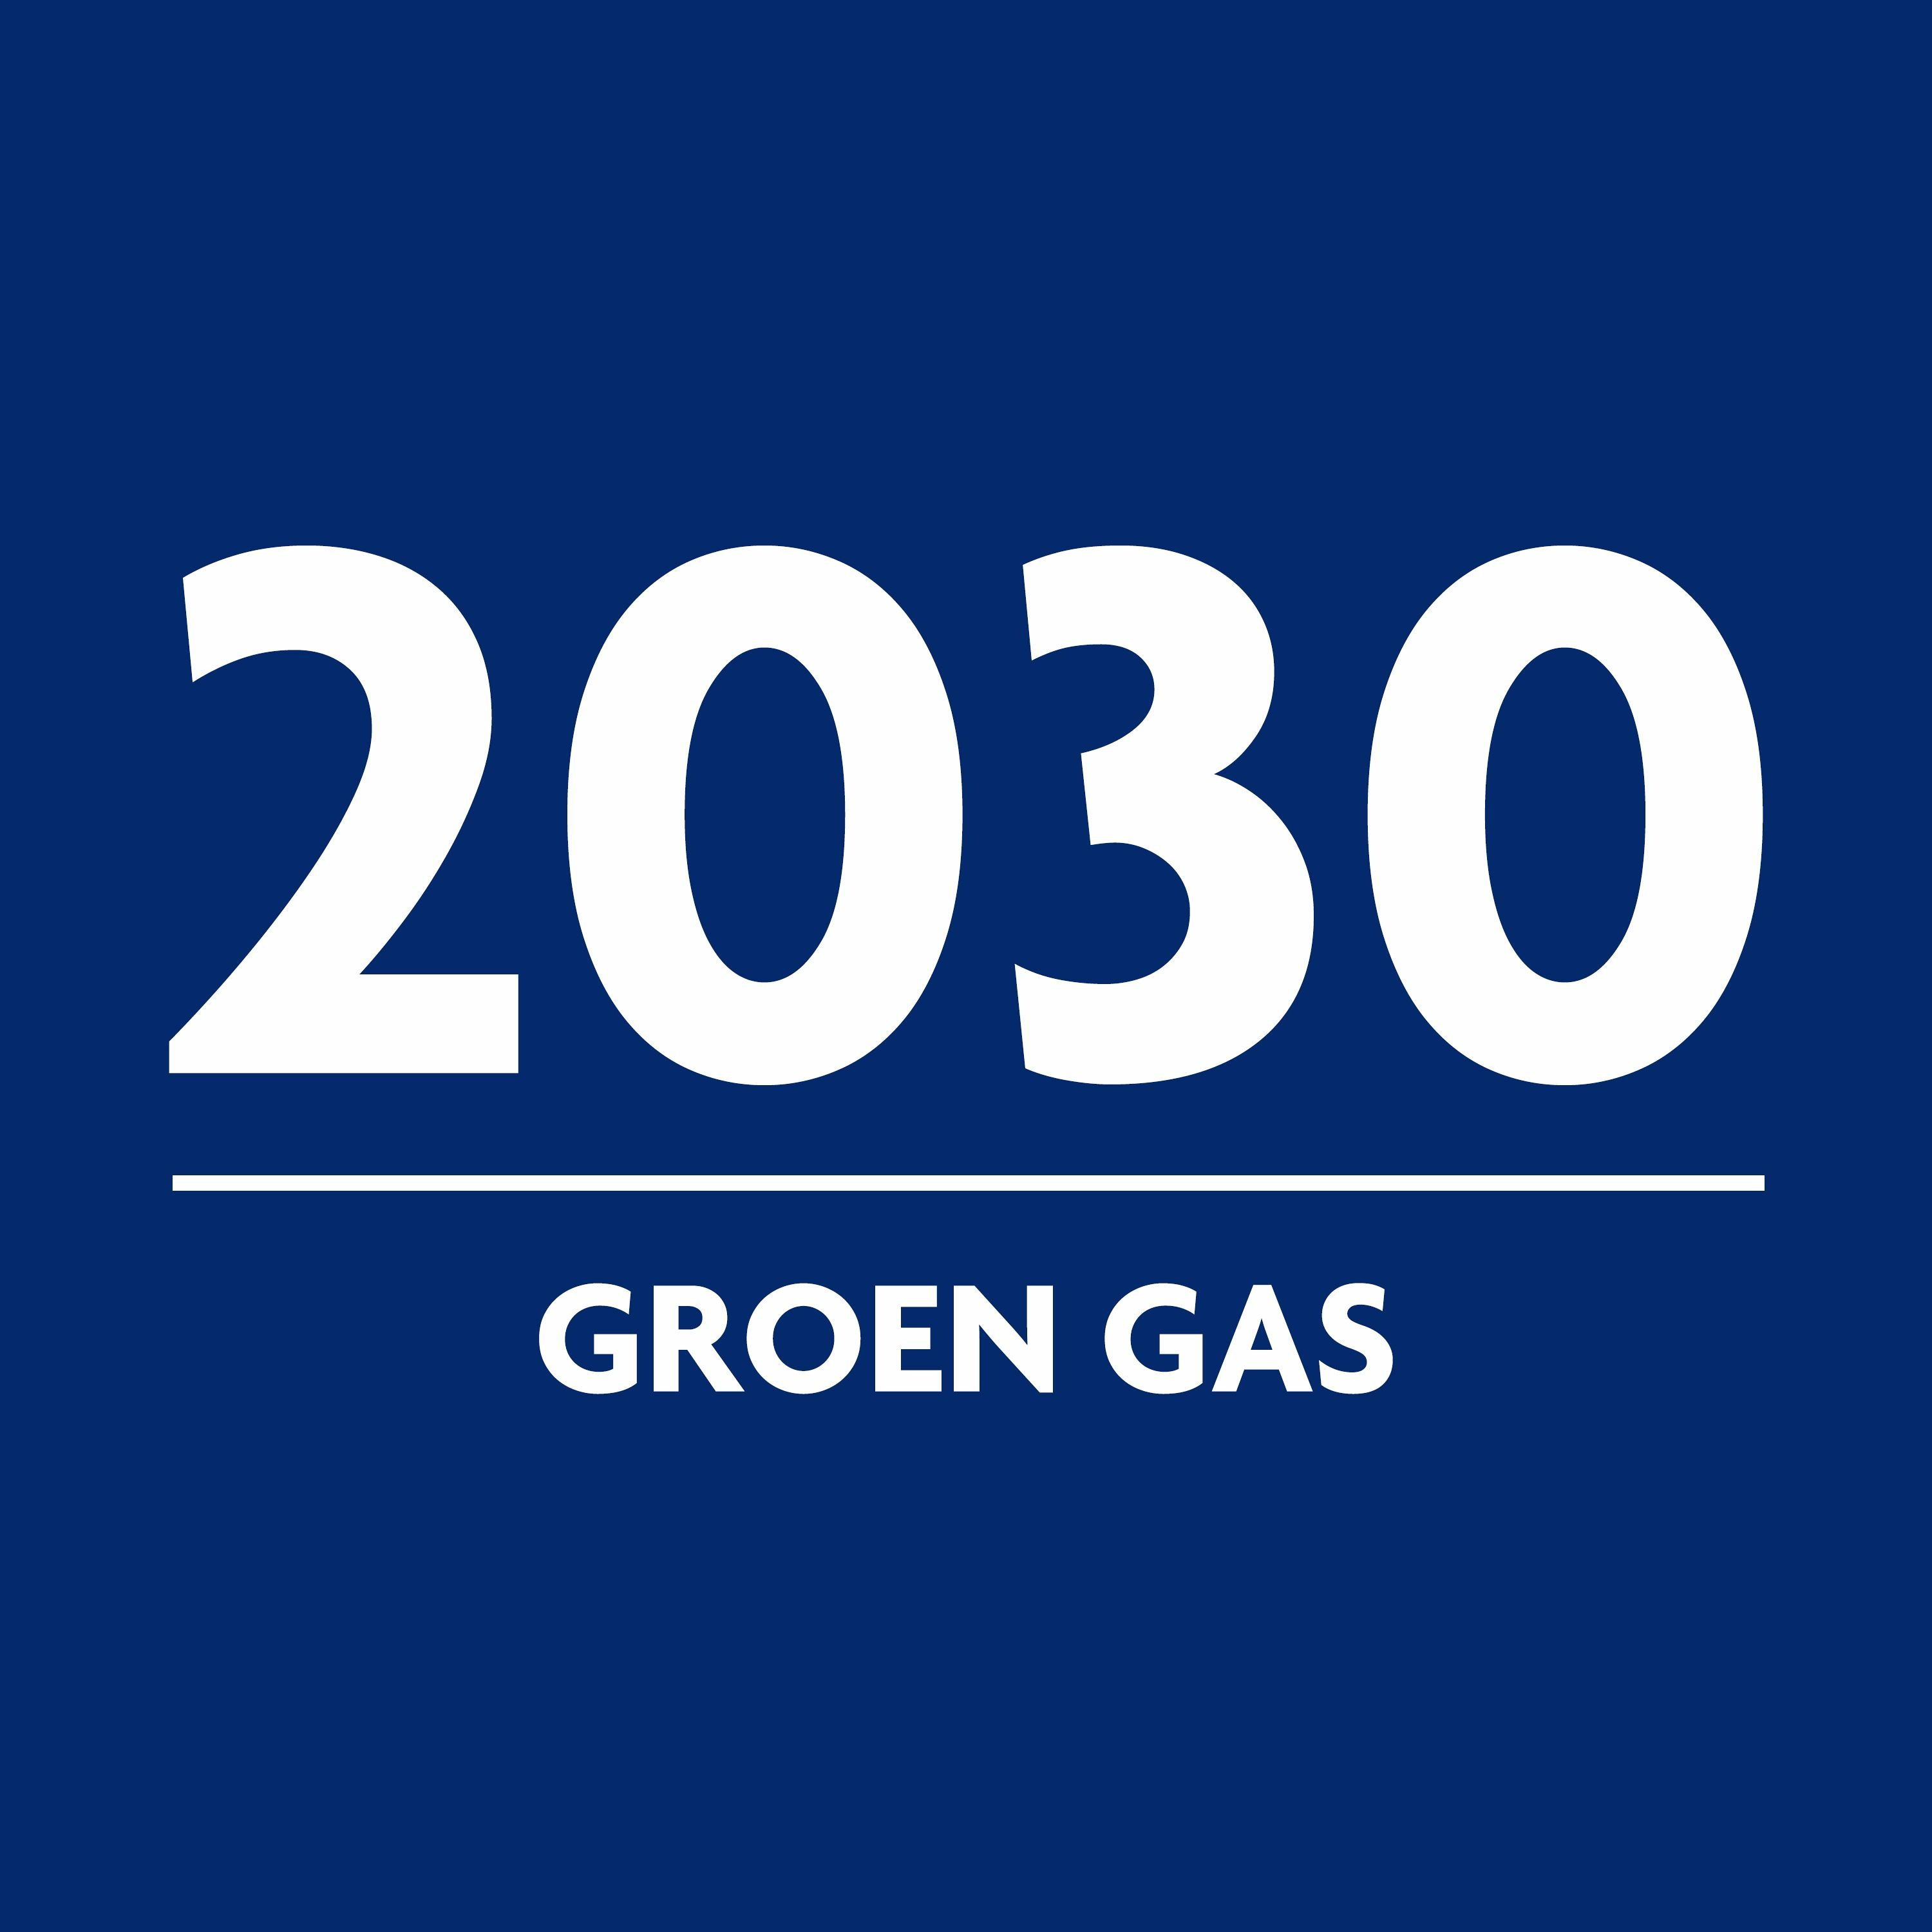 01 - Groen Gas met Diederik Samsom en Michiel van Dam